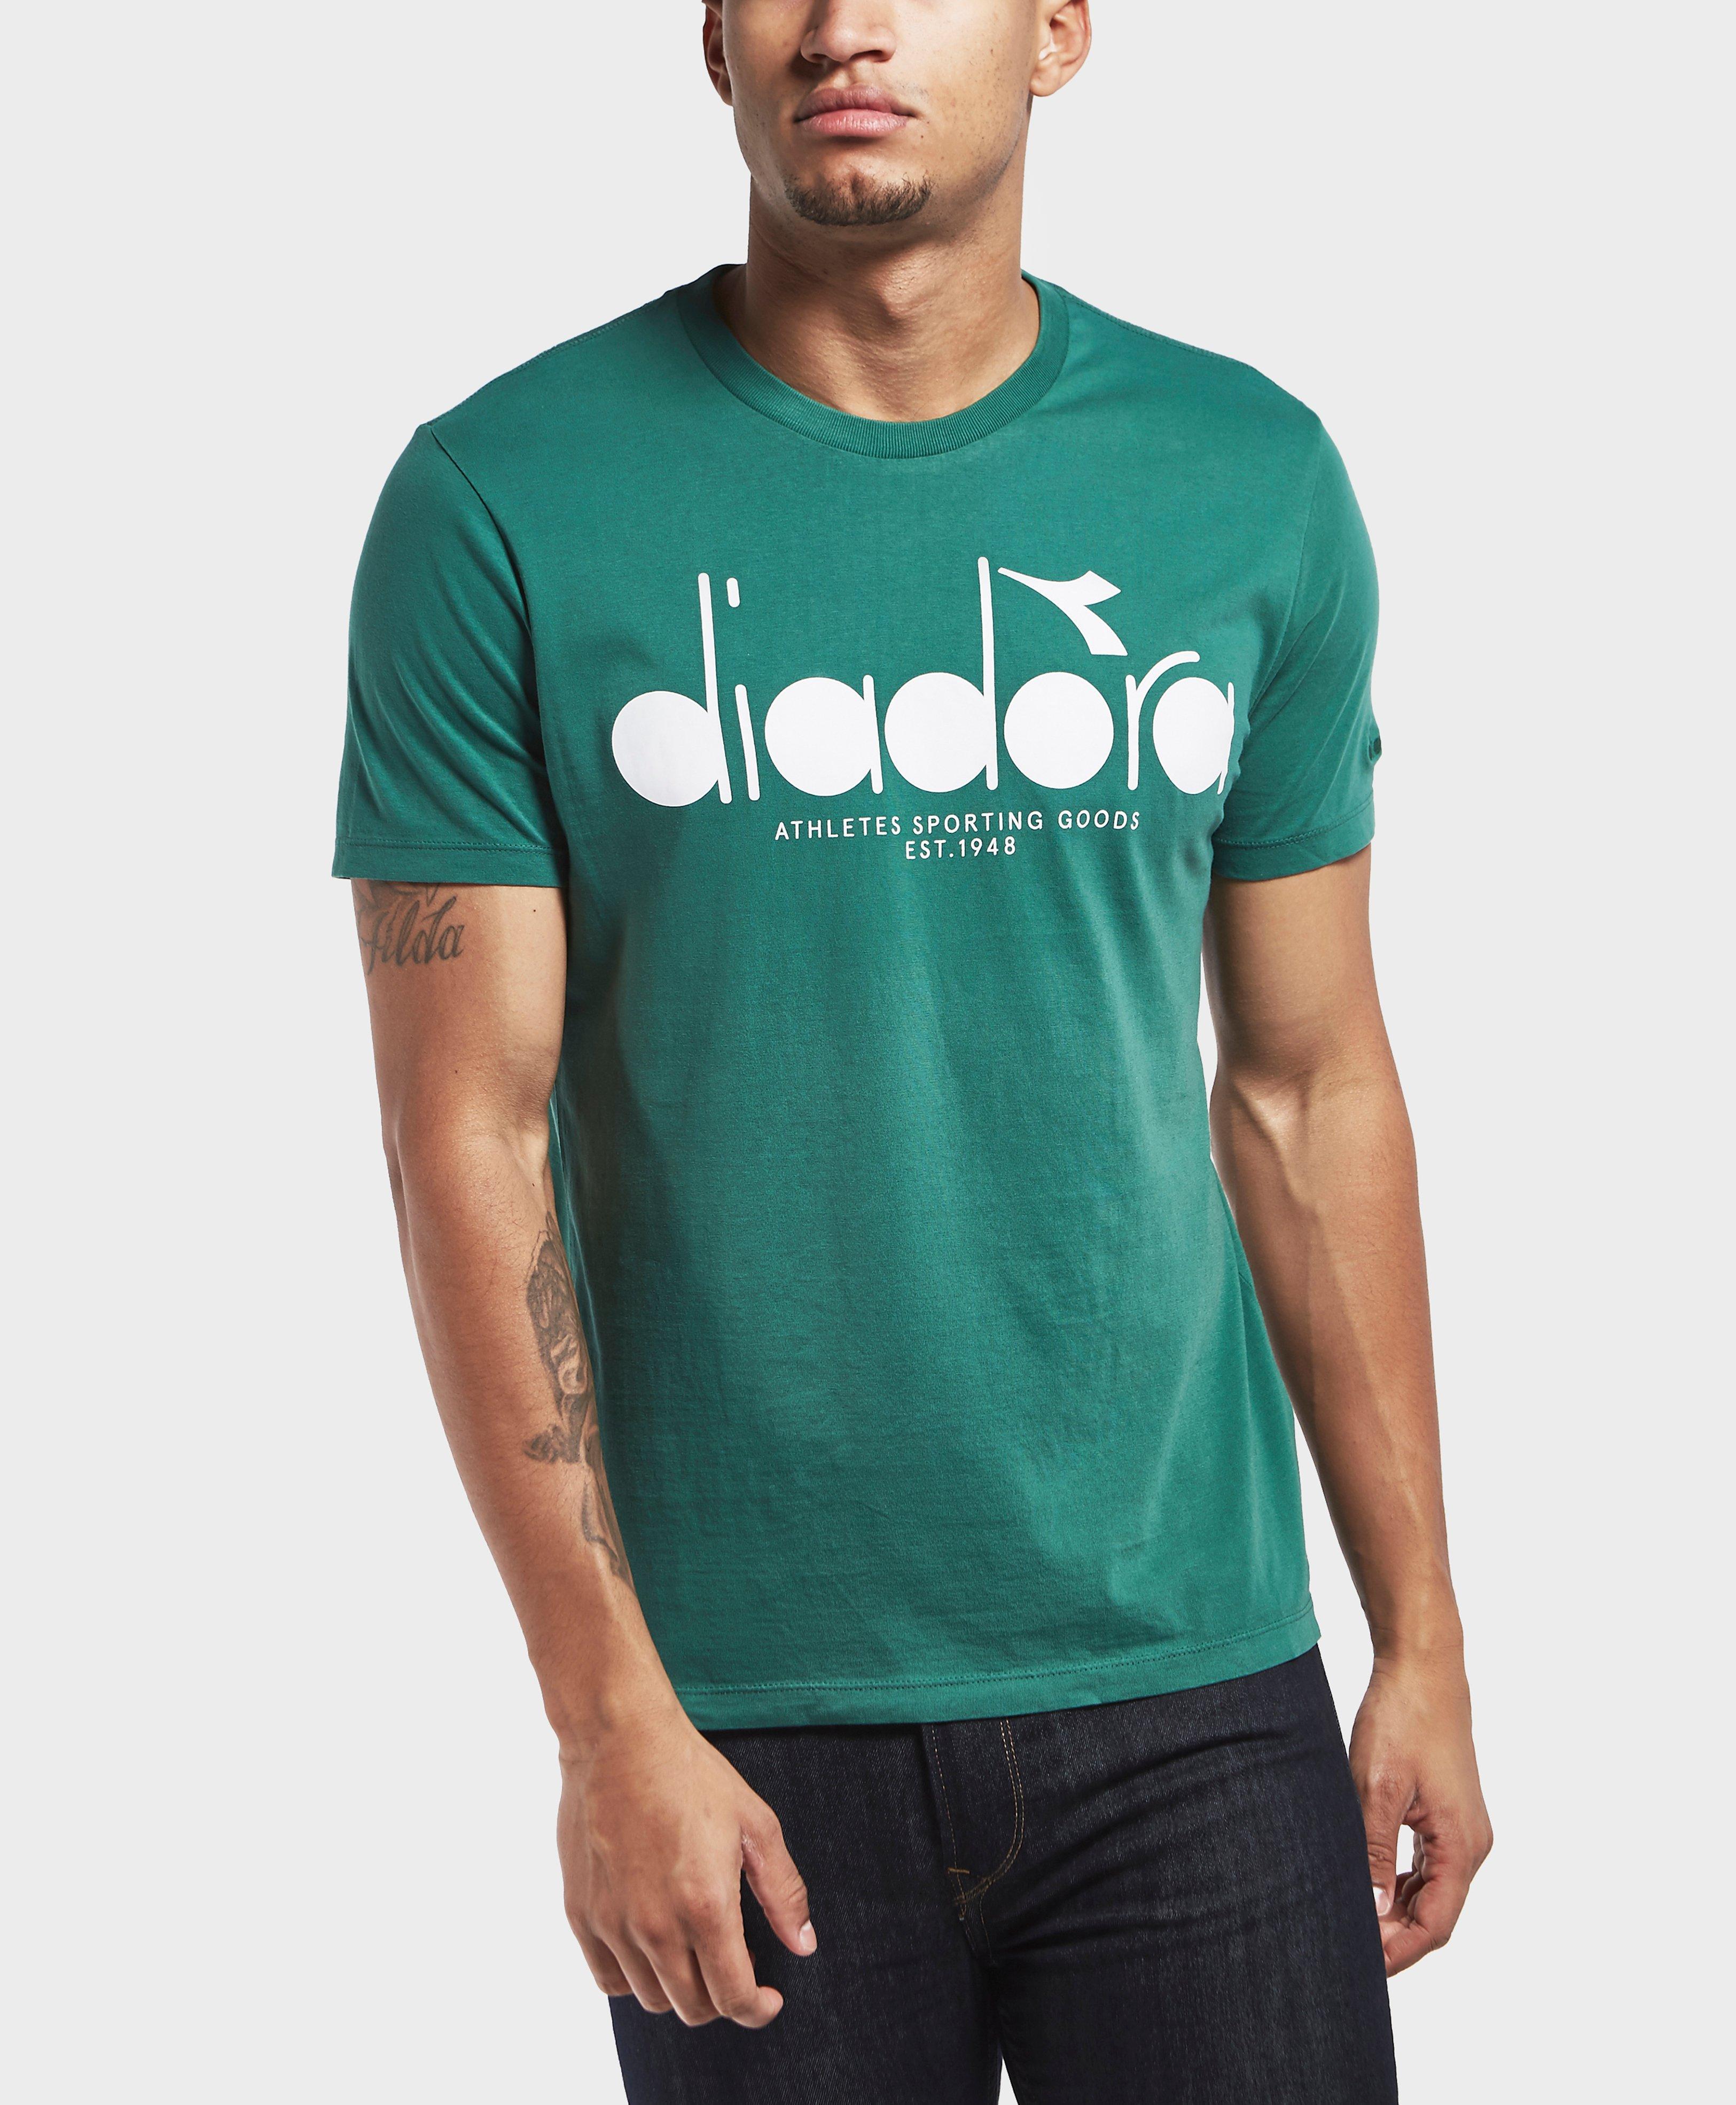 Diadora Cotton Print T-shirt in Green for Men - Lyst